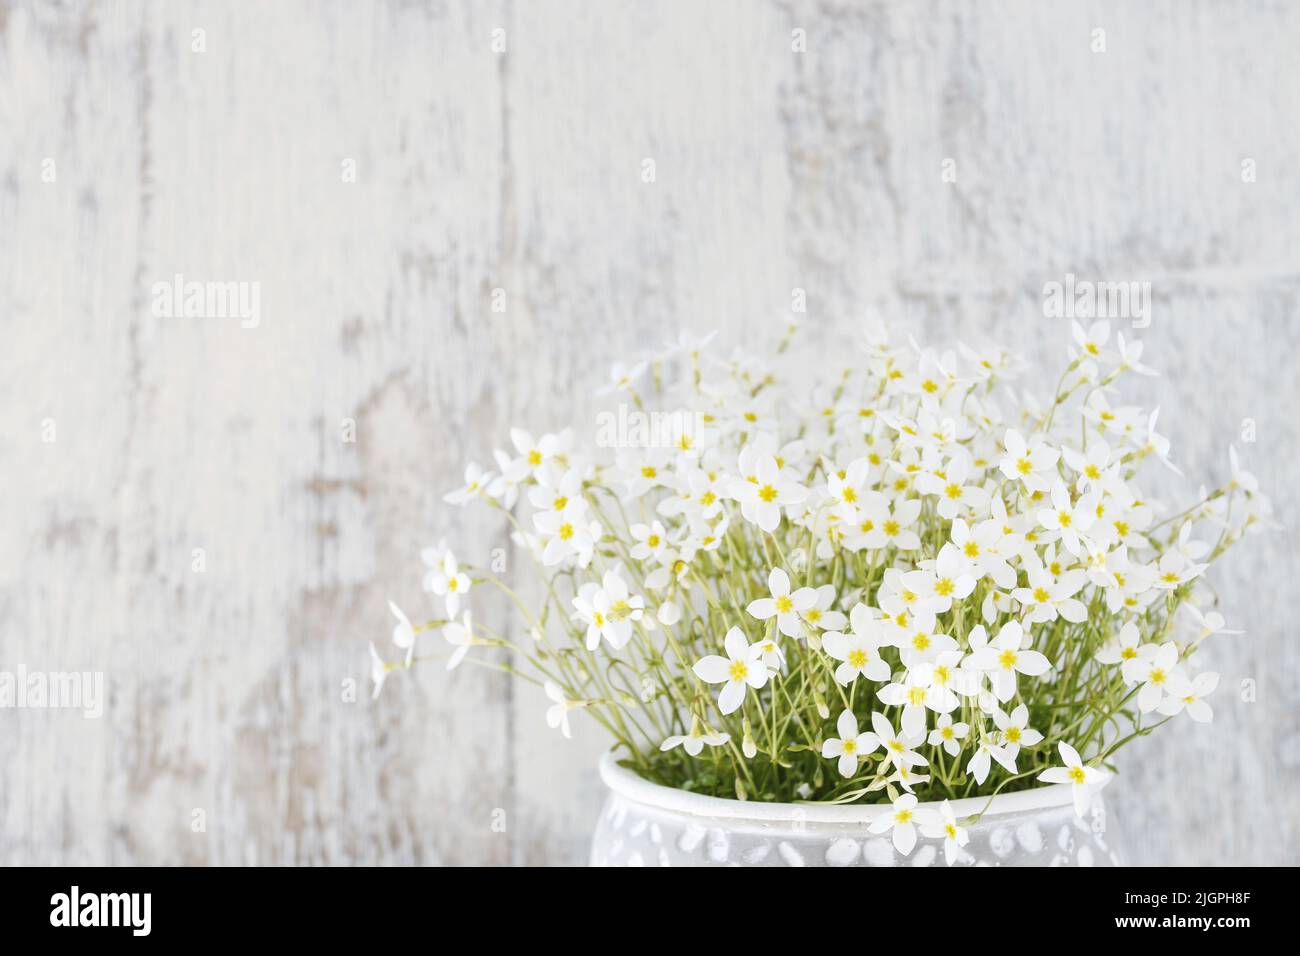 Saxifraga arendsii (Schneeteppich) flowers on white wooden background. Graphic resources Stock Photo